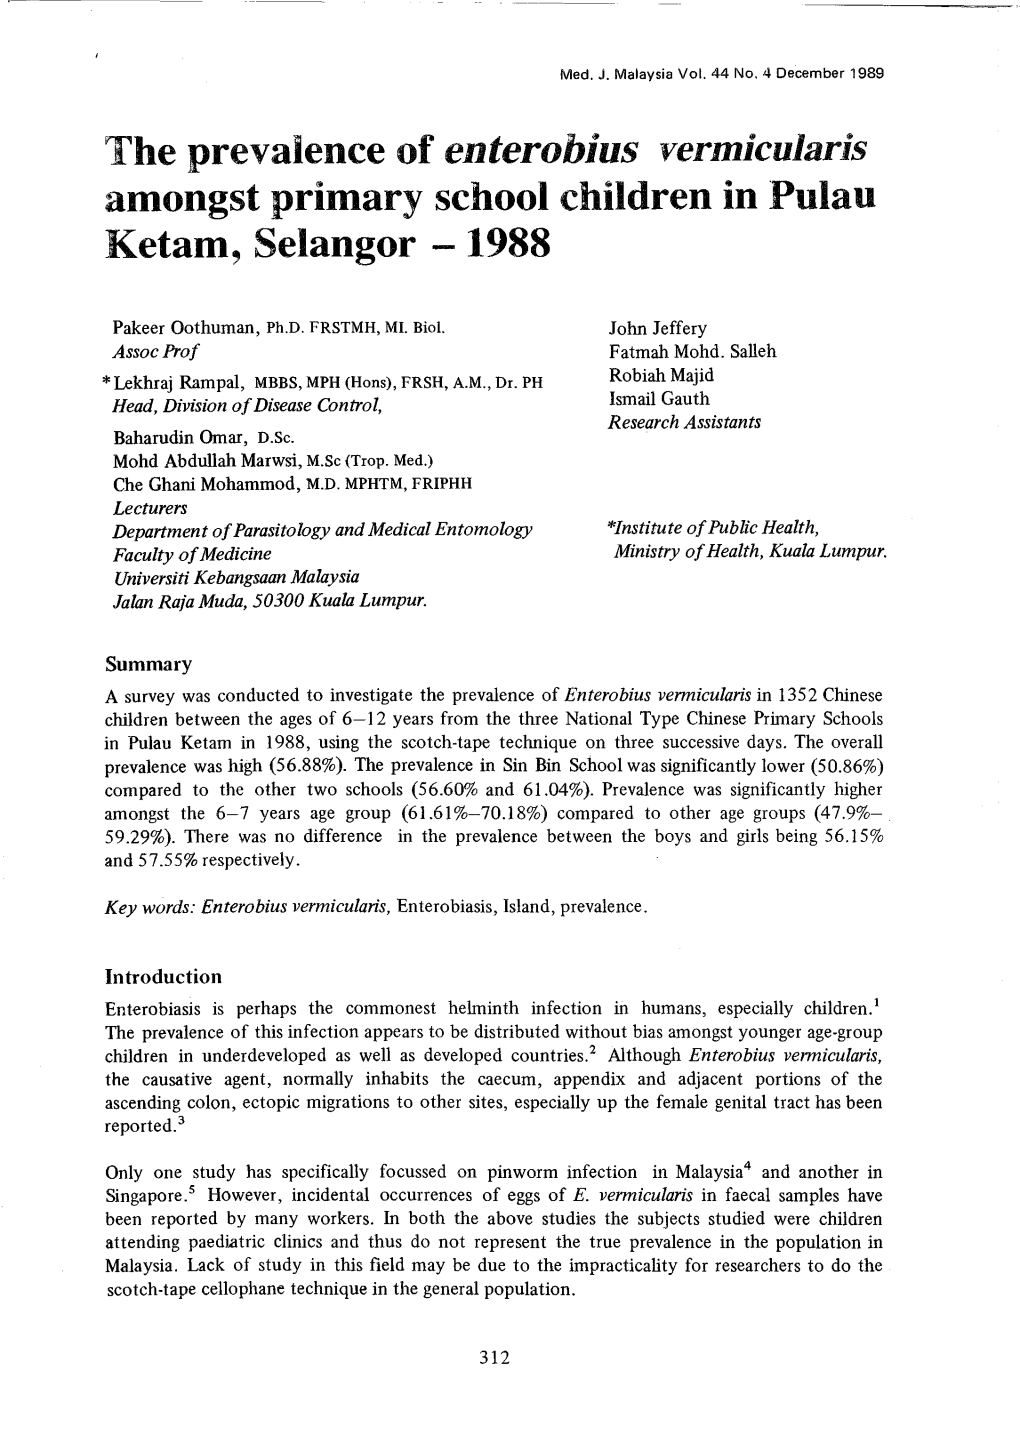 The Prevalence of Enterobius Vermiculsris Amongst Primary School Children in Pulau Ketam, Selangor - 1988